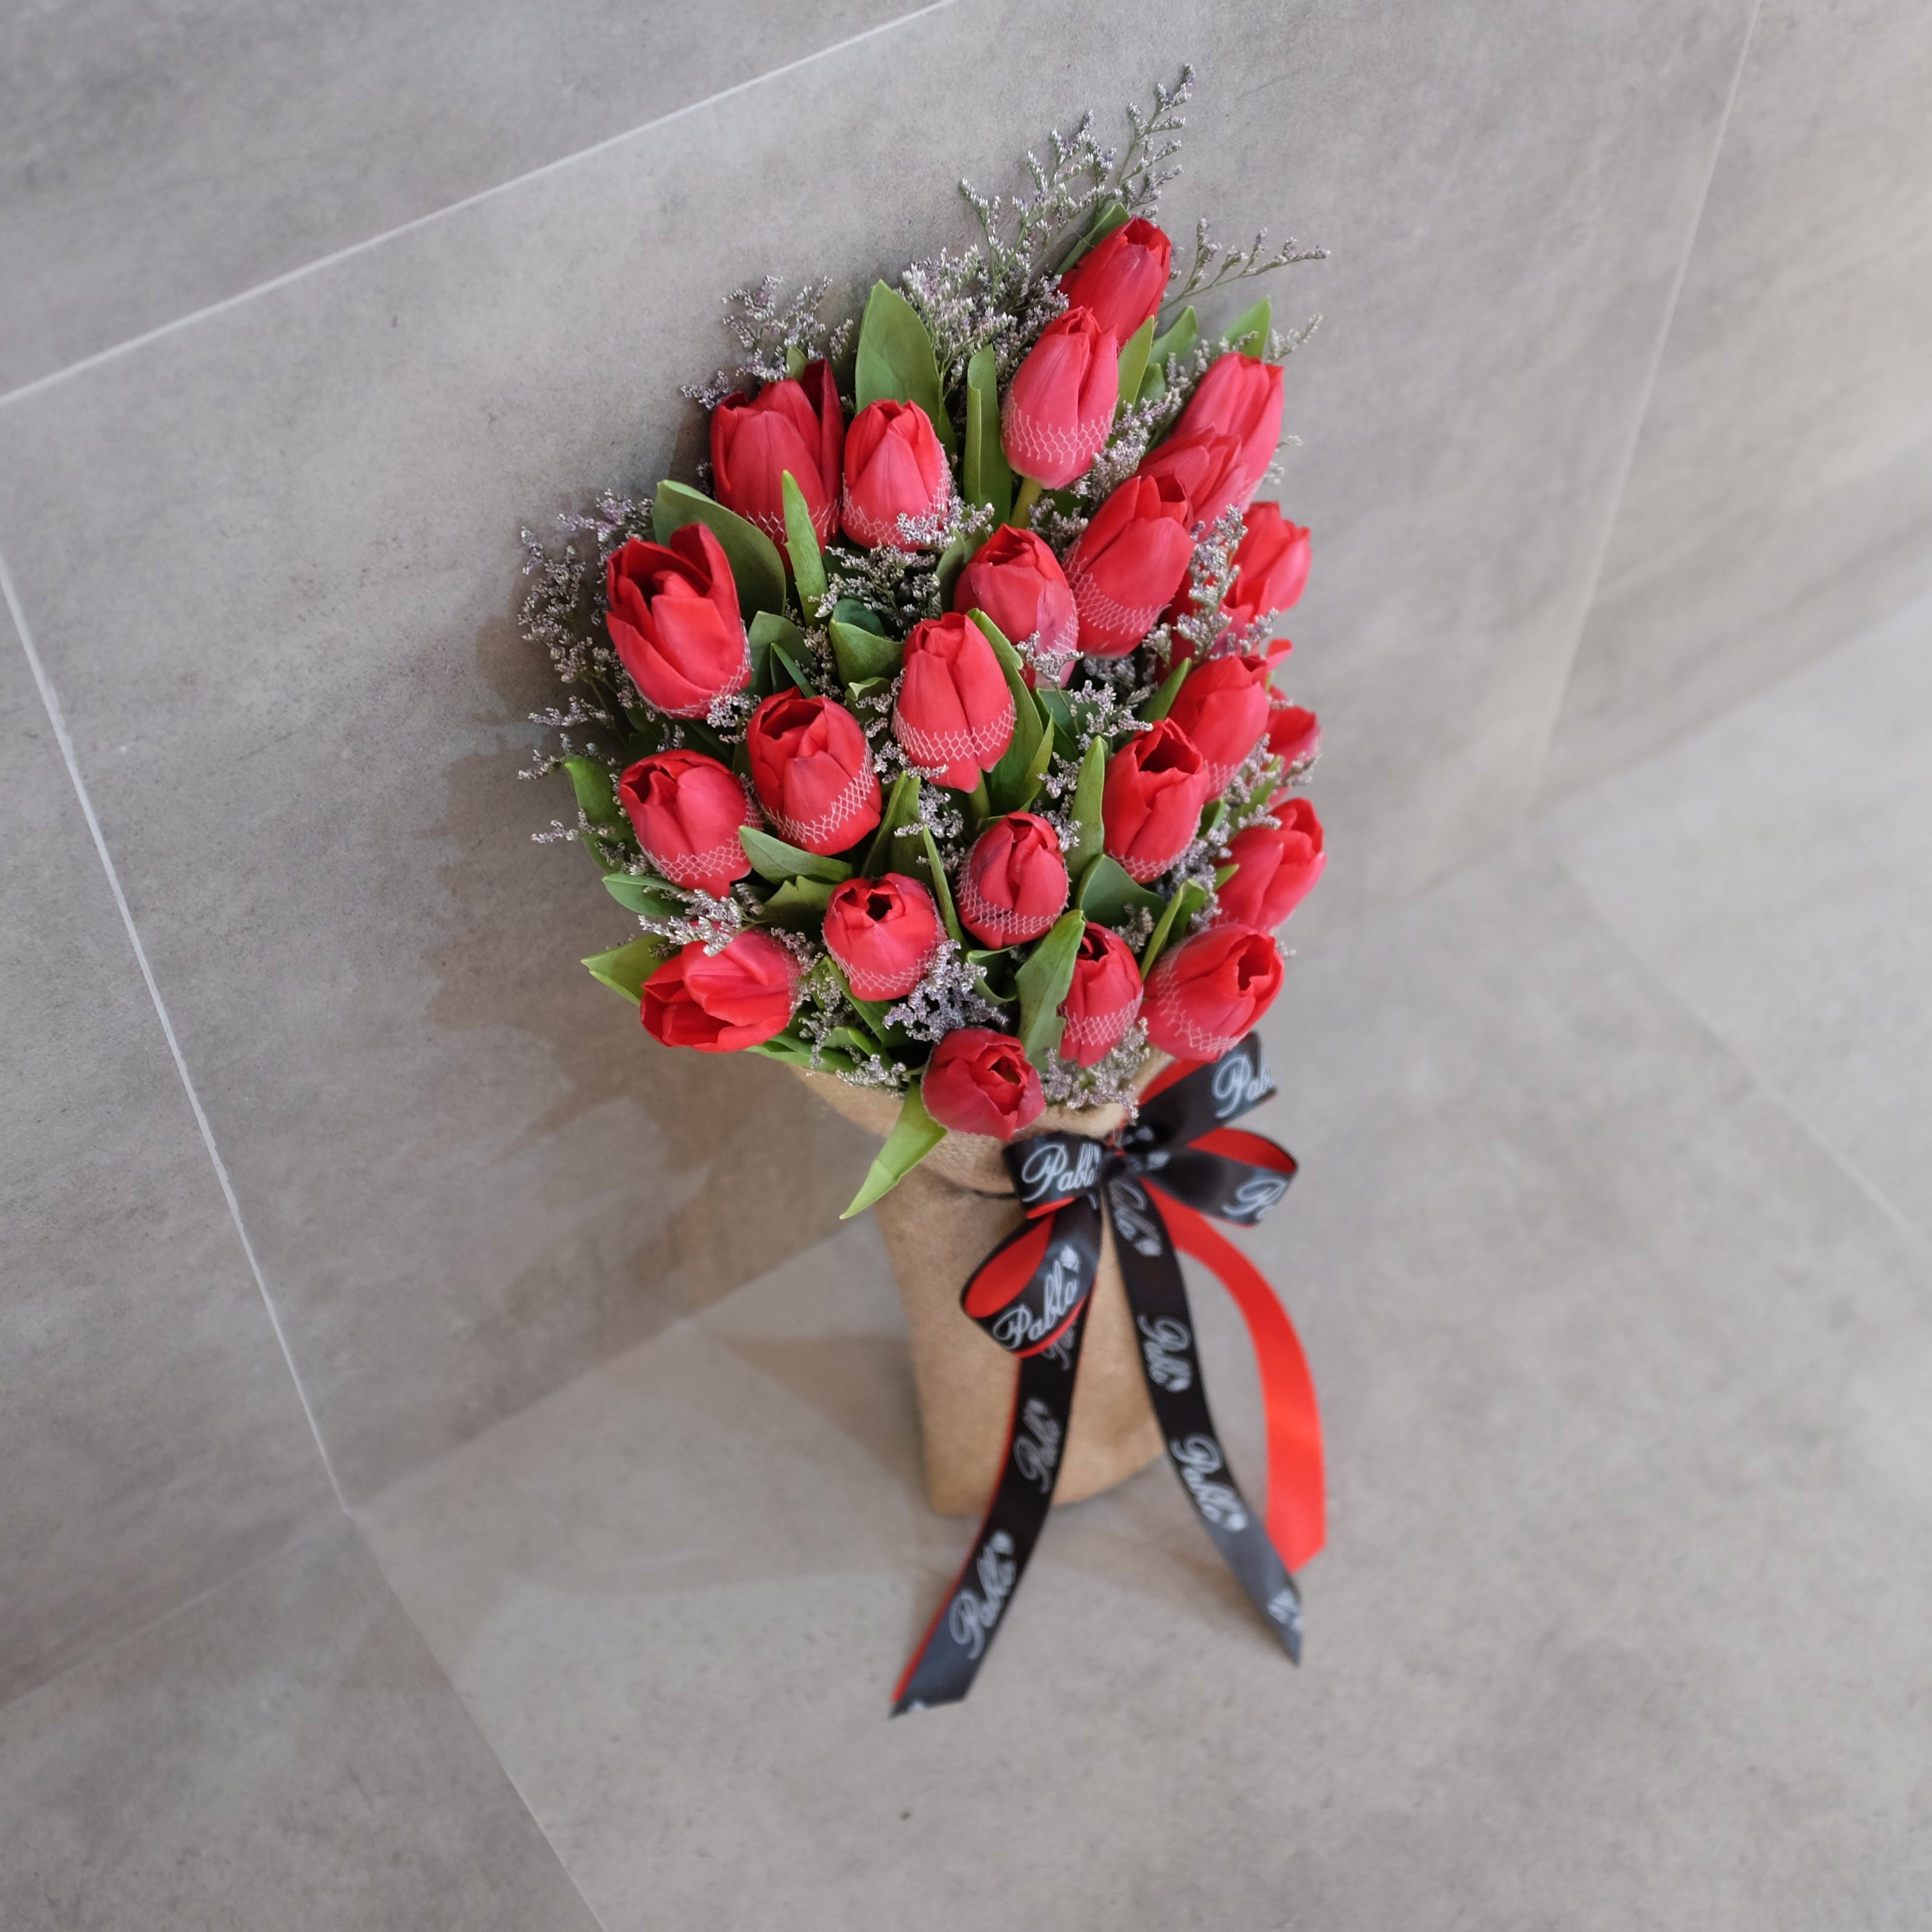 5750 CASANOVA 24 24 red tulips bq1-min.jpg